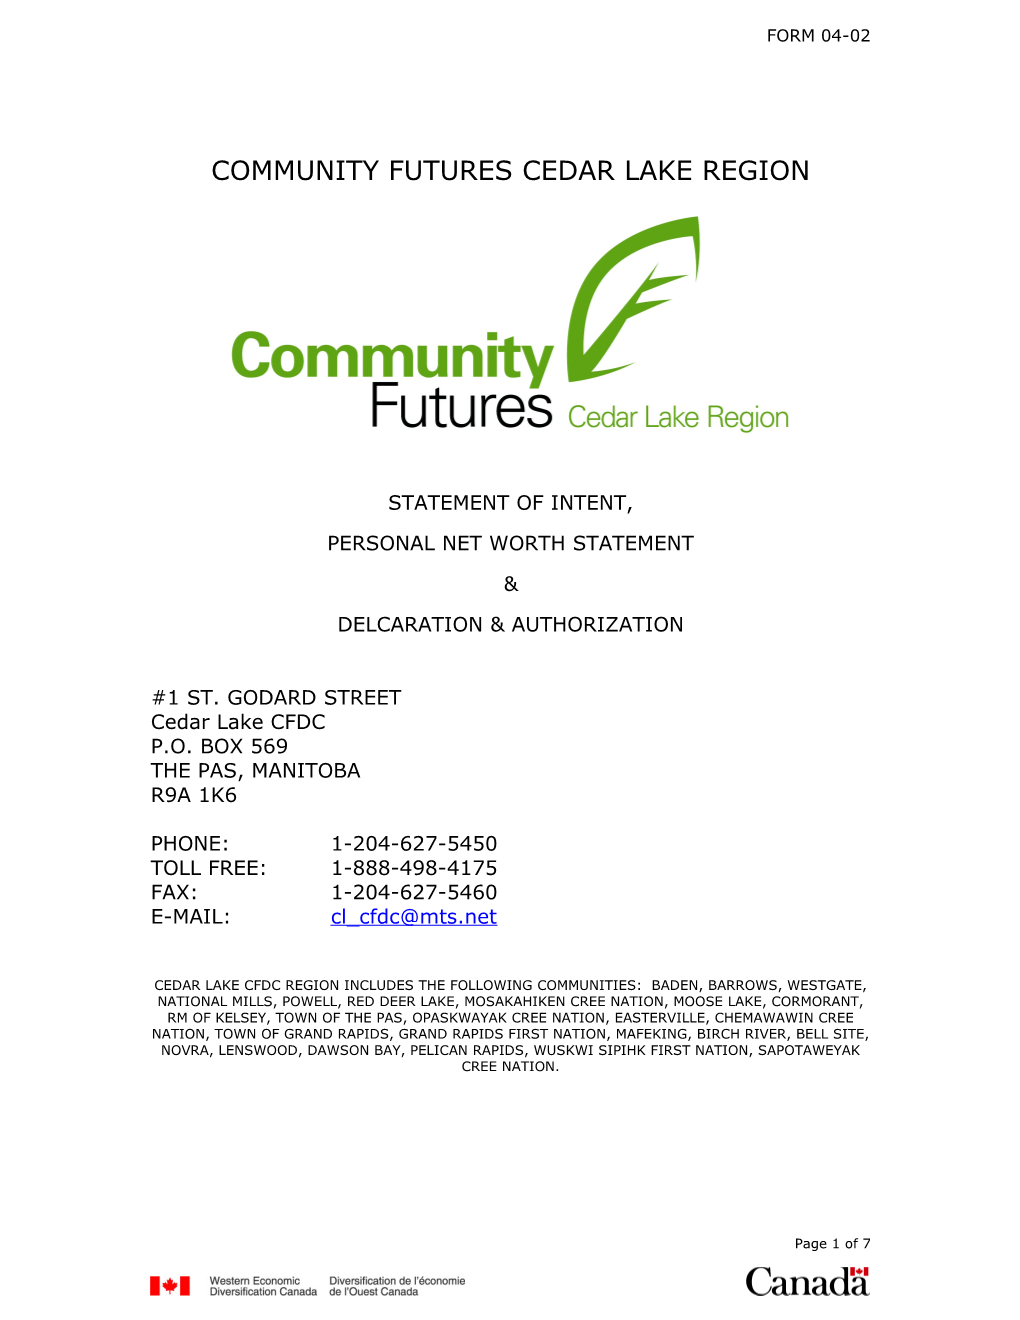 Community Futures Cedar Lake Region Statement of Intent